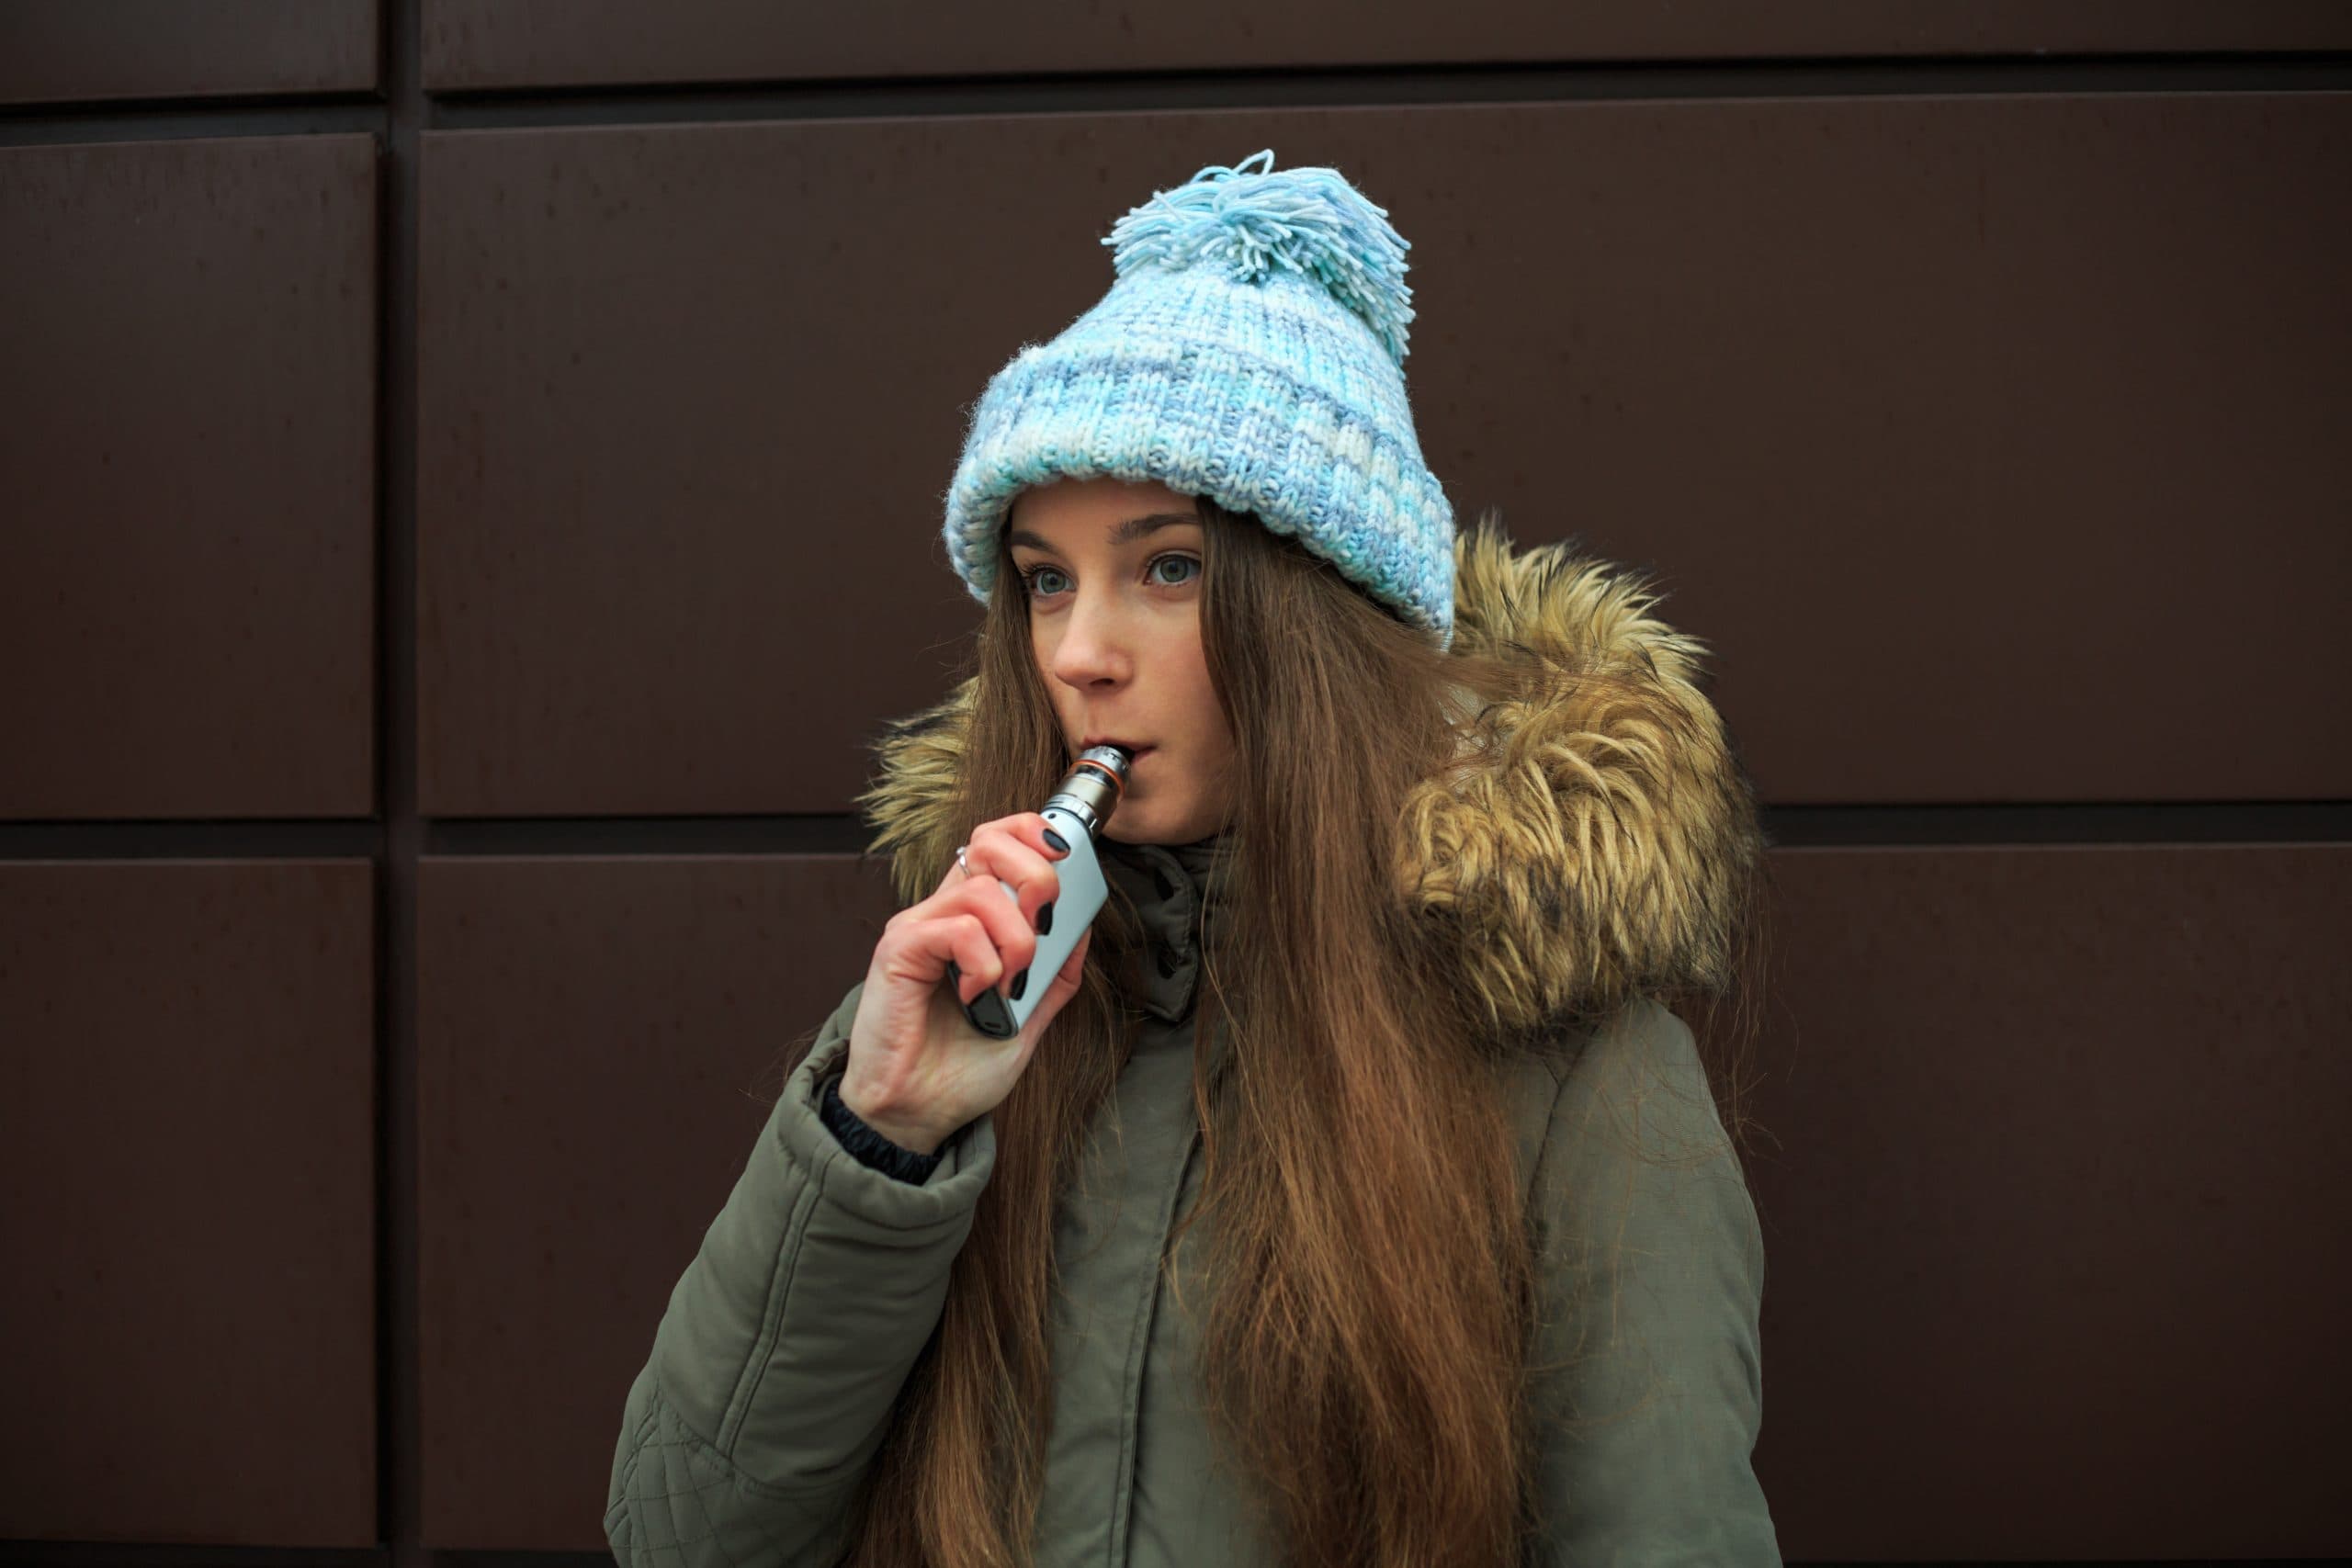 Female teenager in winter clothing, vaping outside